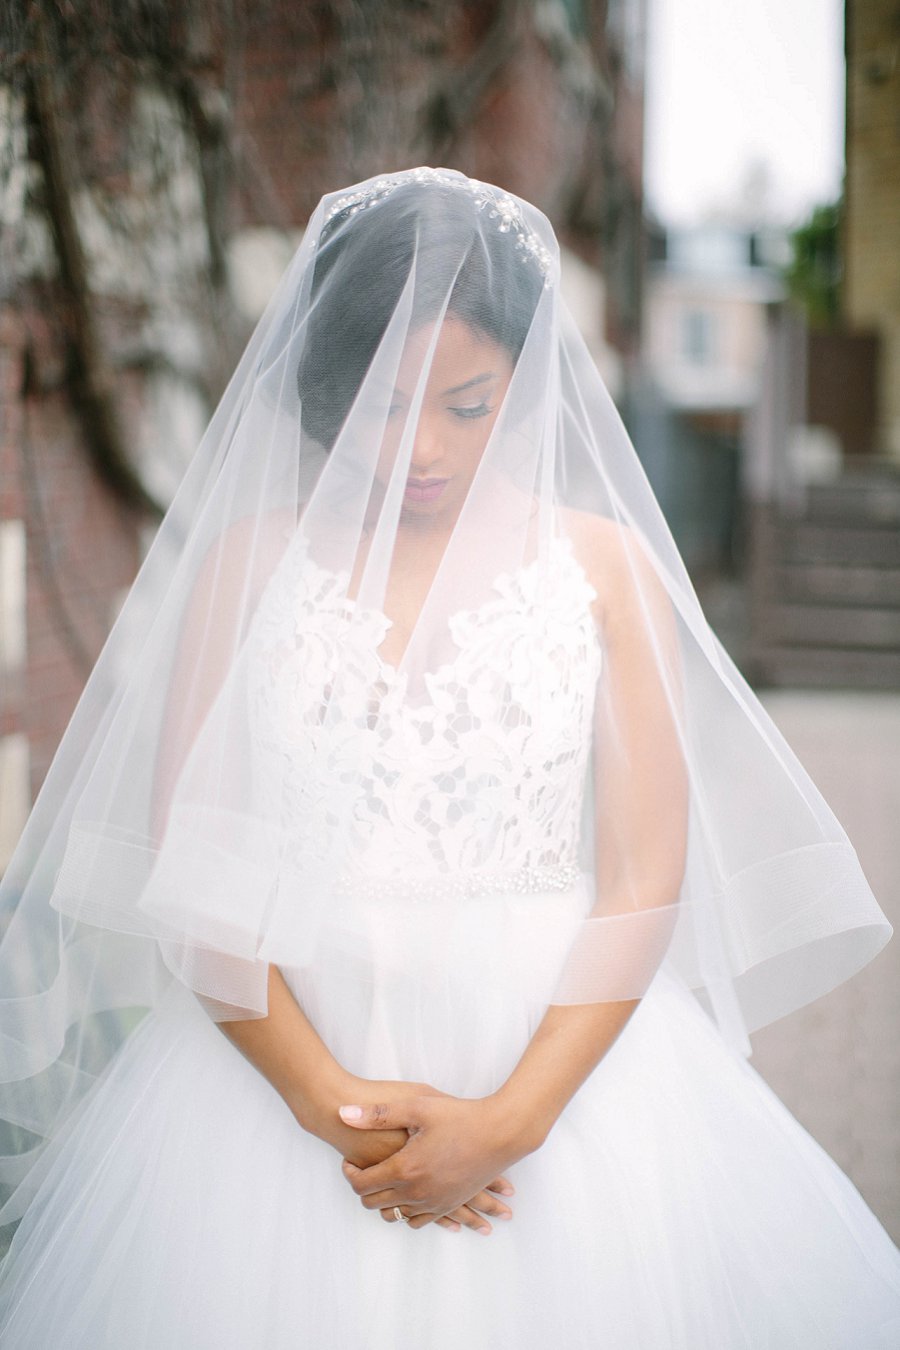 rochelle-clarke-wedding-toronto-photographer-samantha-clarke